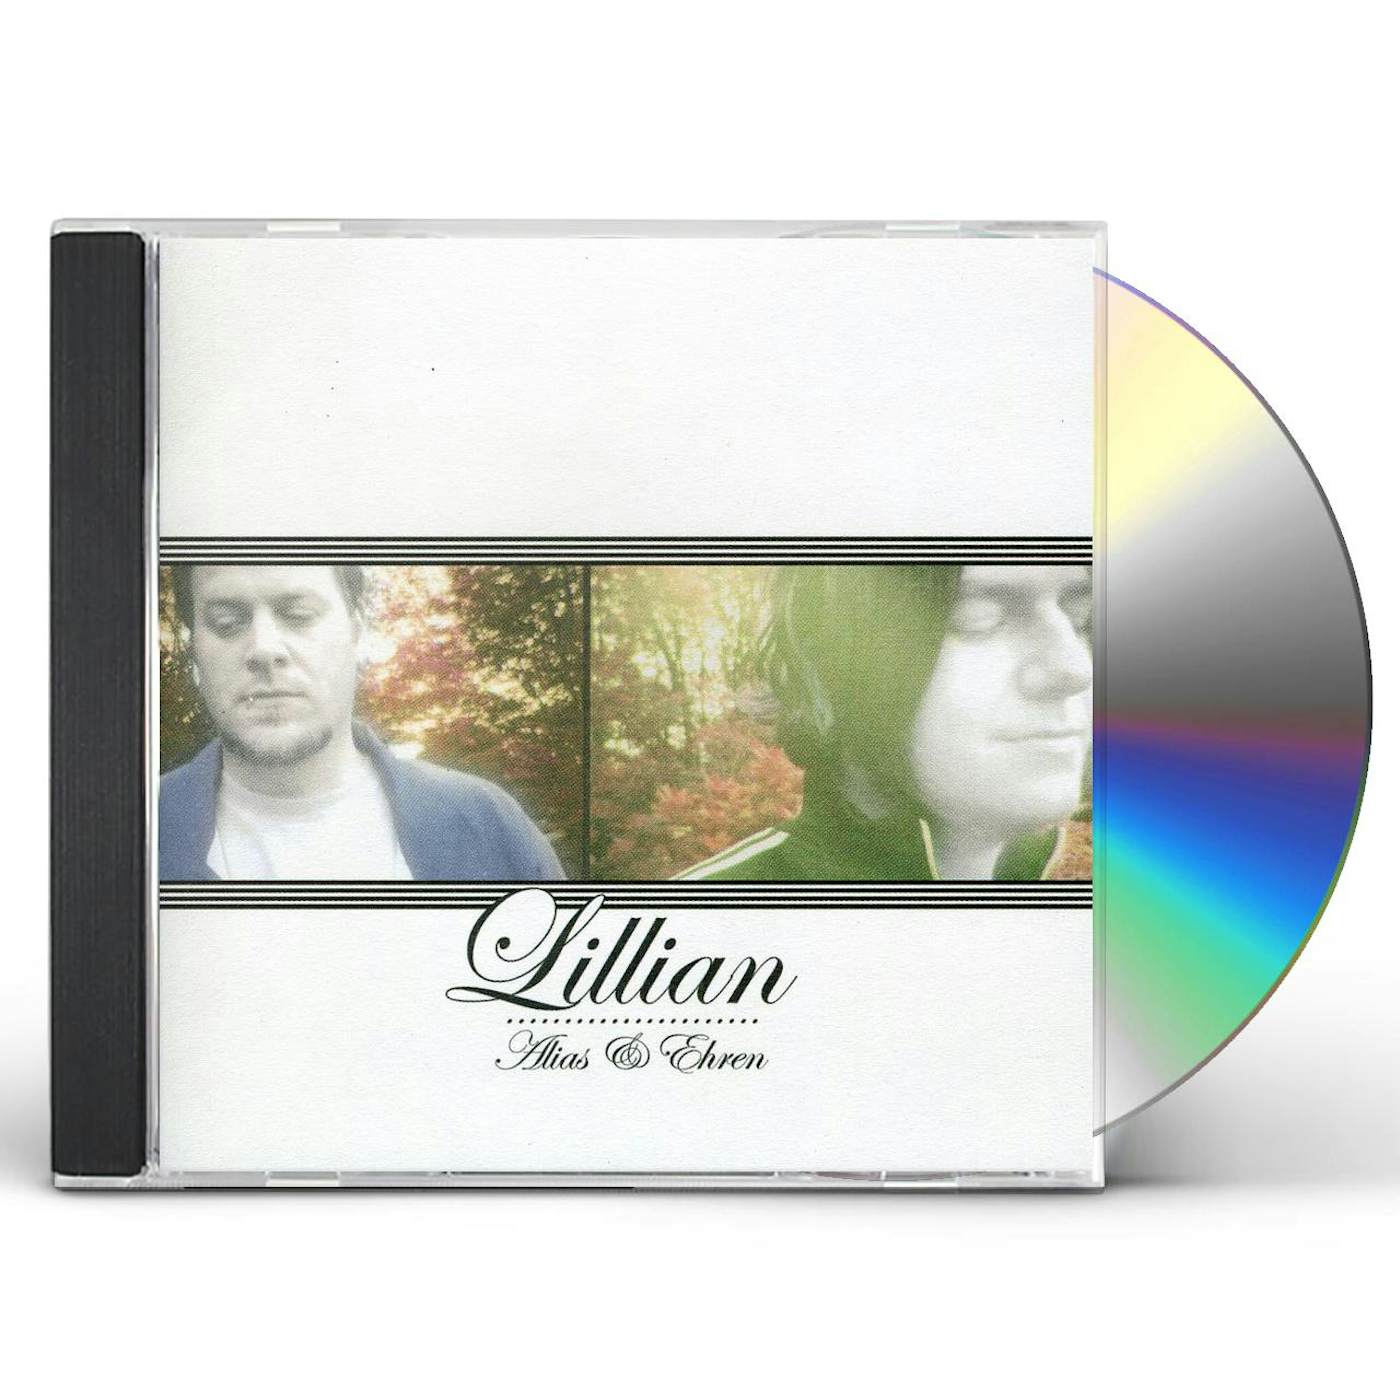 Alias & Ehren LILLIAN CD